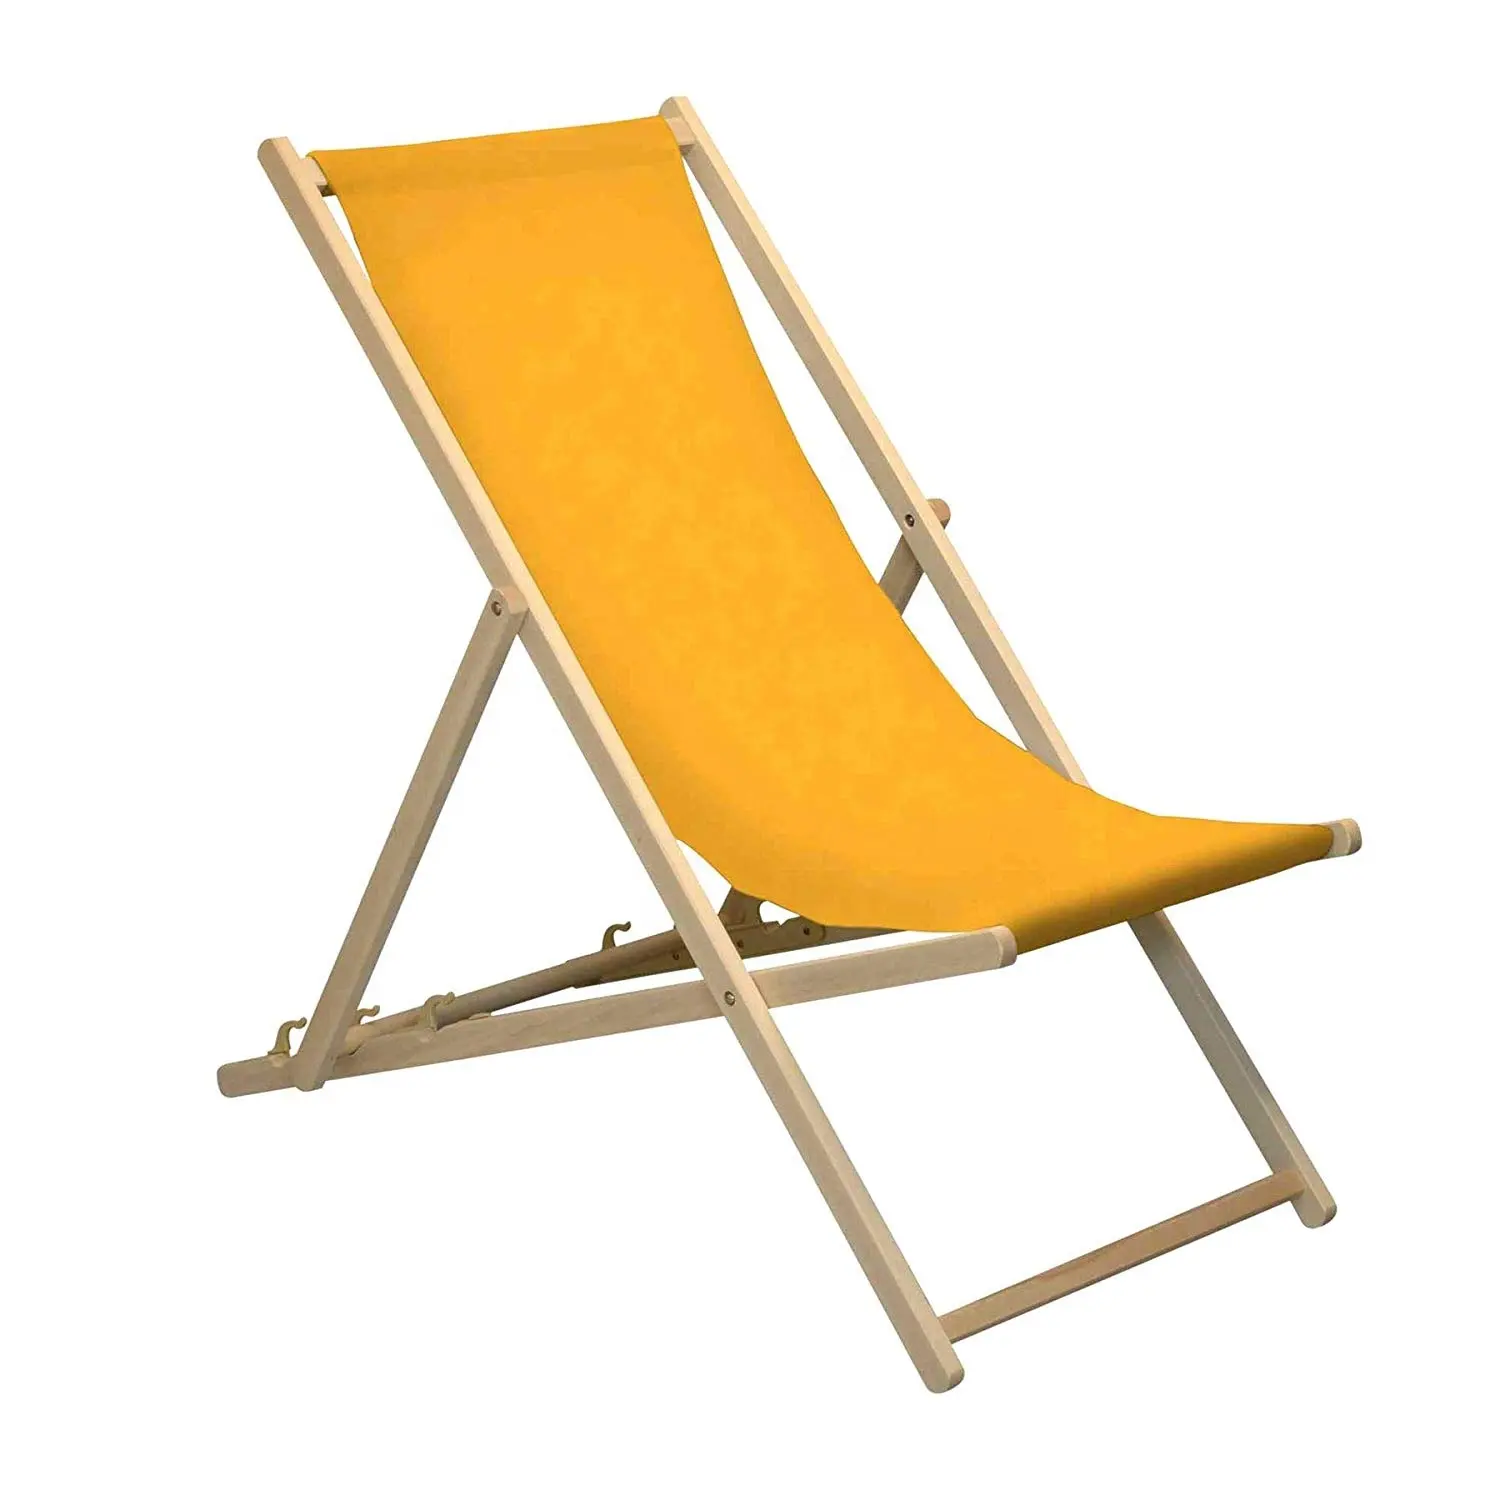 Sunshine hardwood folding polyester beach chair sun lounge deck chair